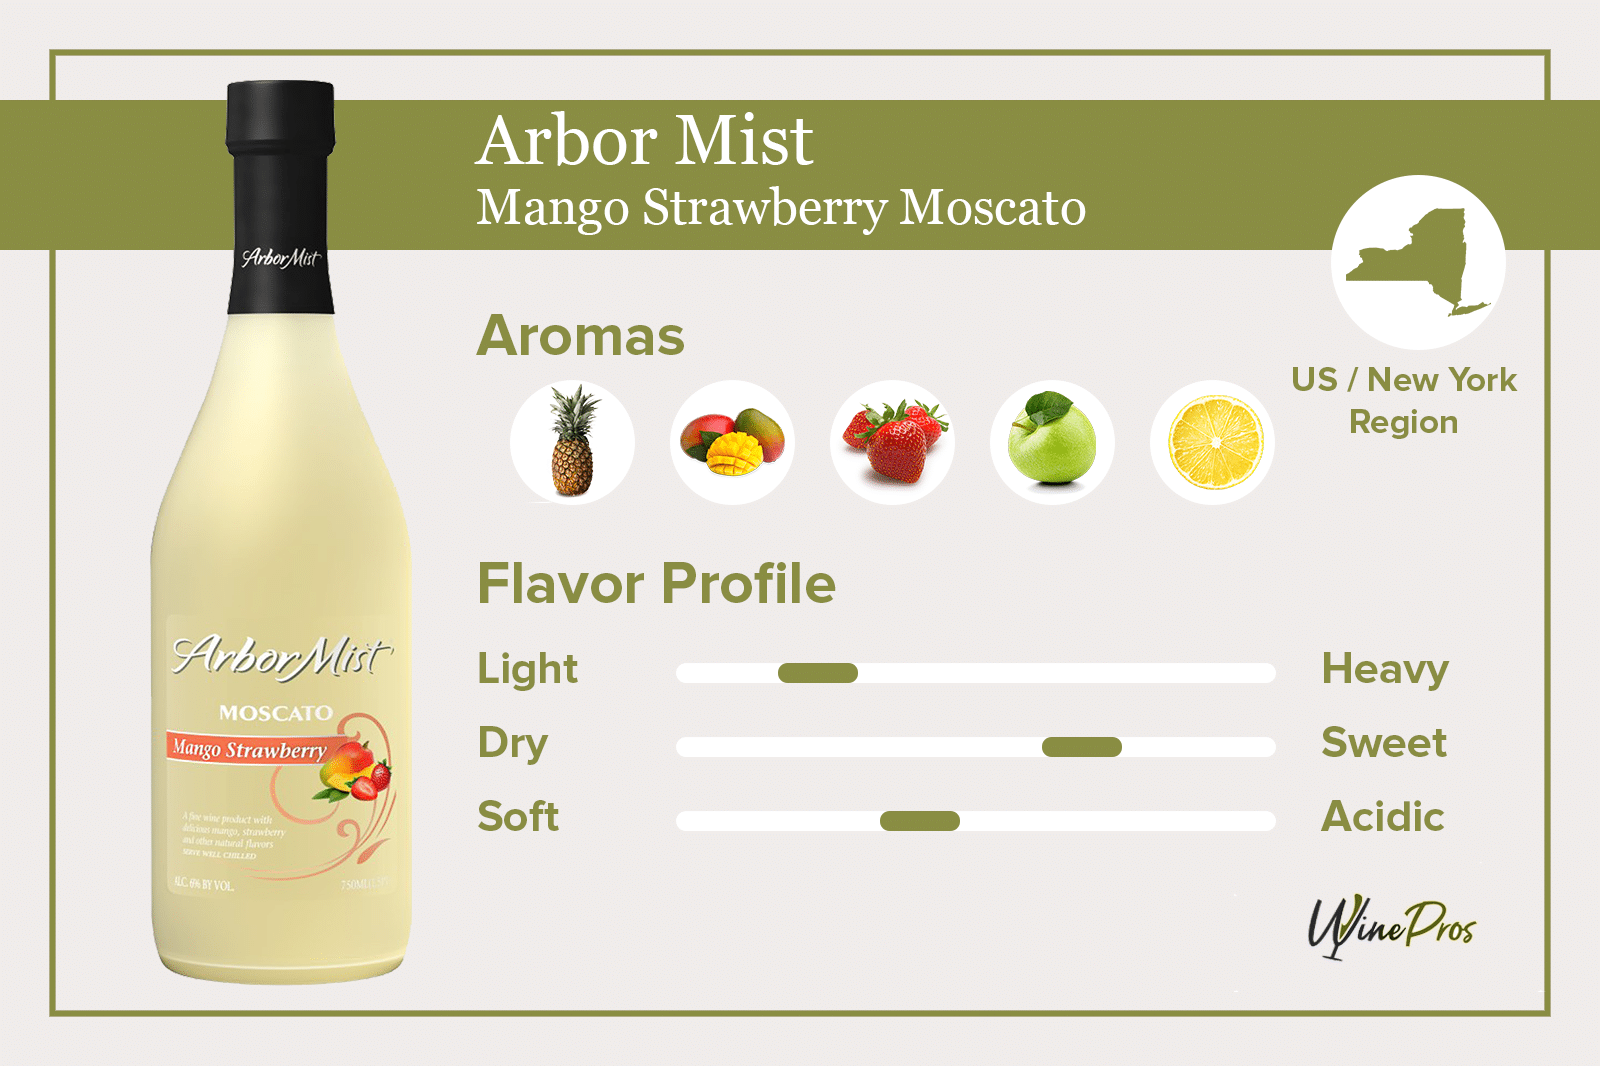 Arbor Mist Mango Strawberry Moscato Review (2022)